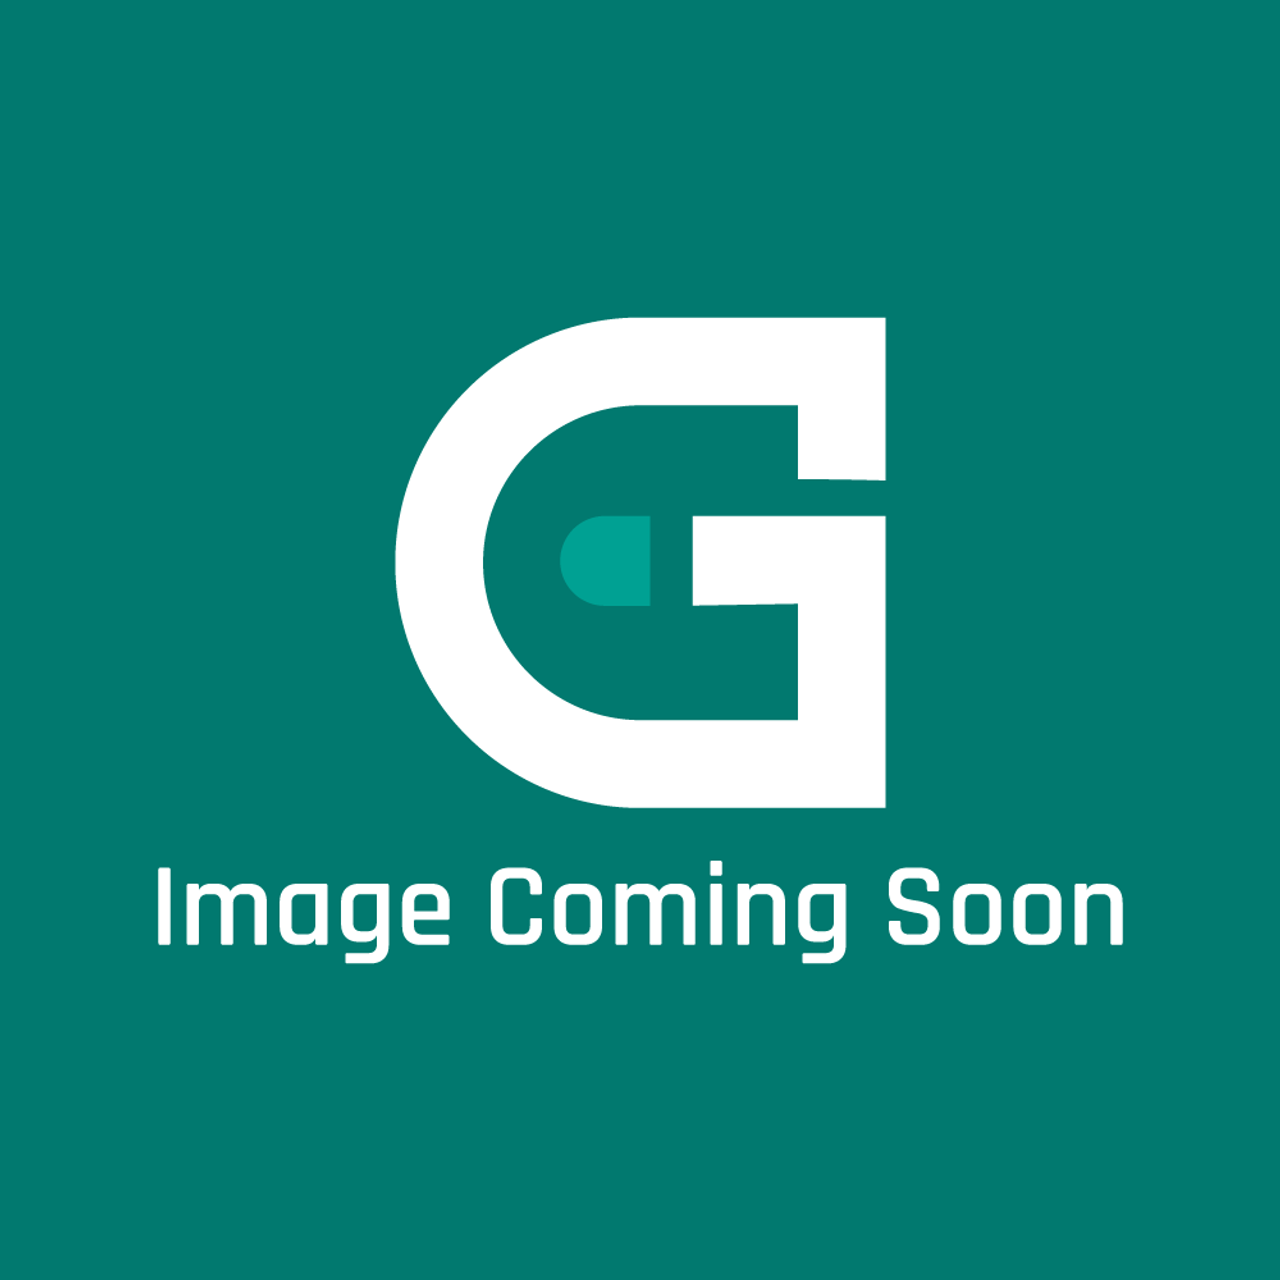 AGA Marvel S41016213 - Rf/Ri Mechanical Harness - Image Coming Soon!